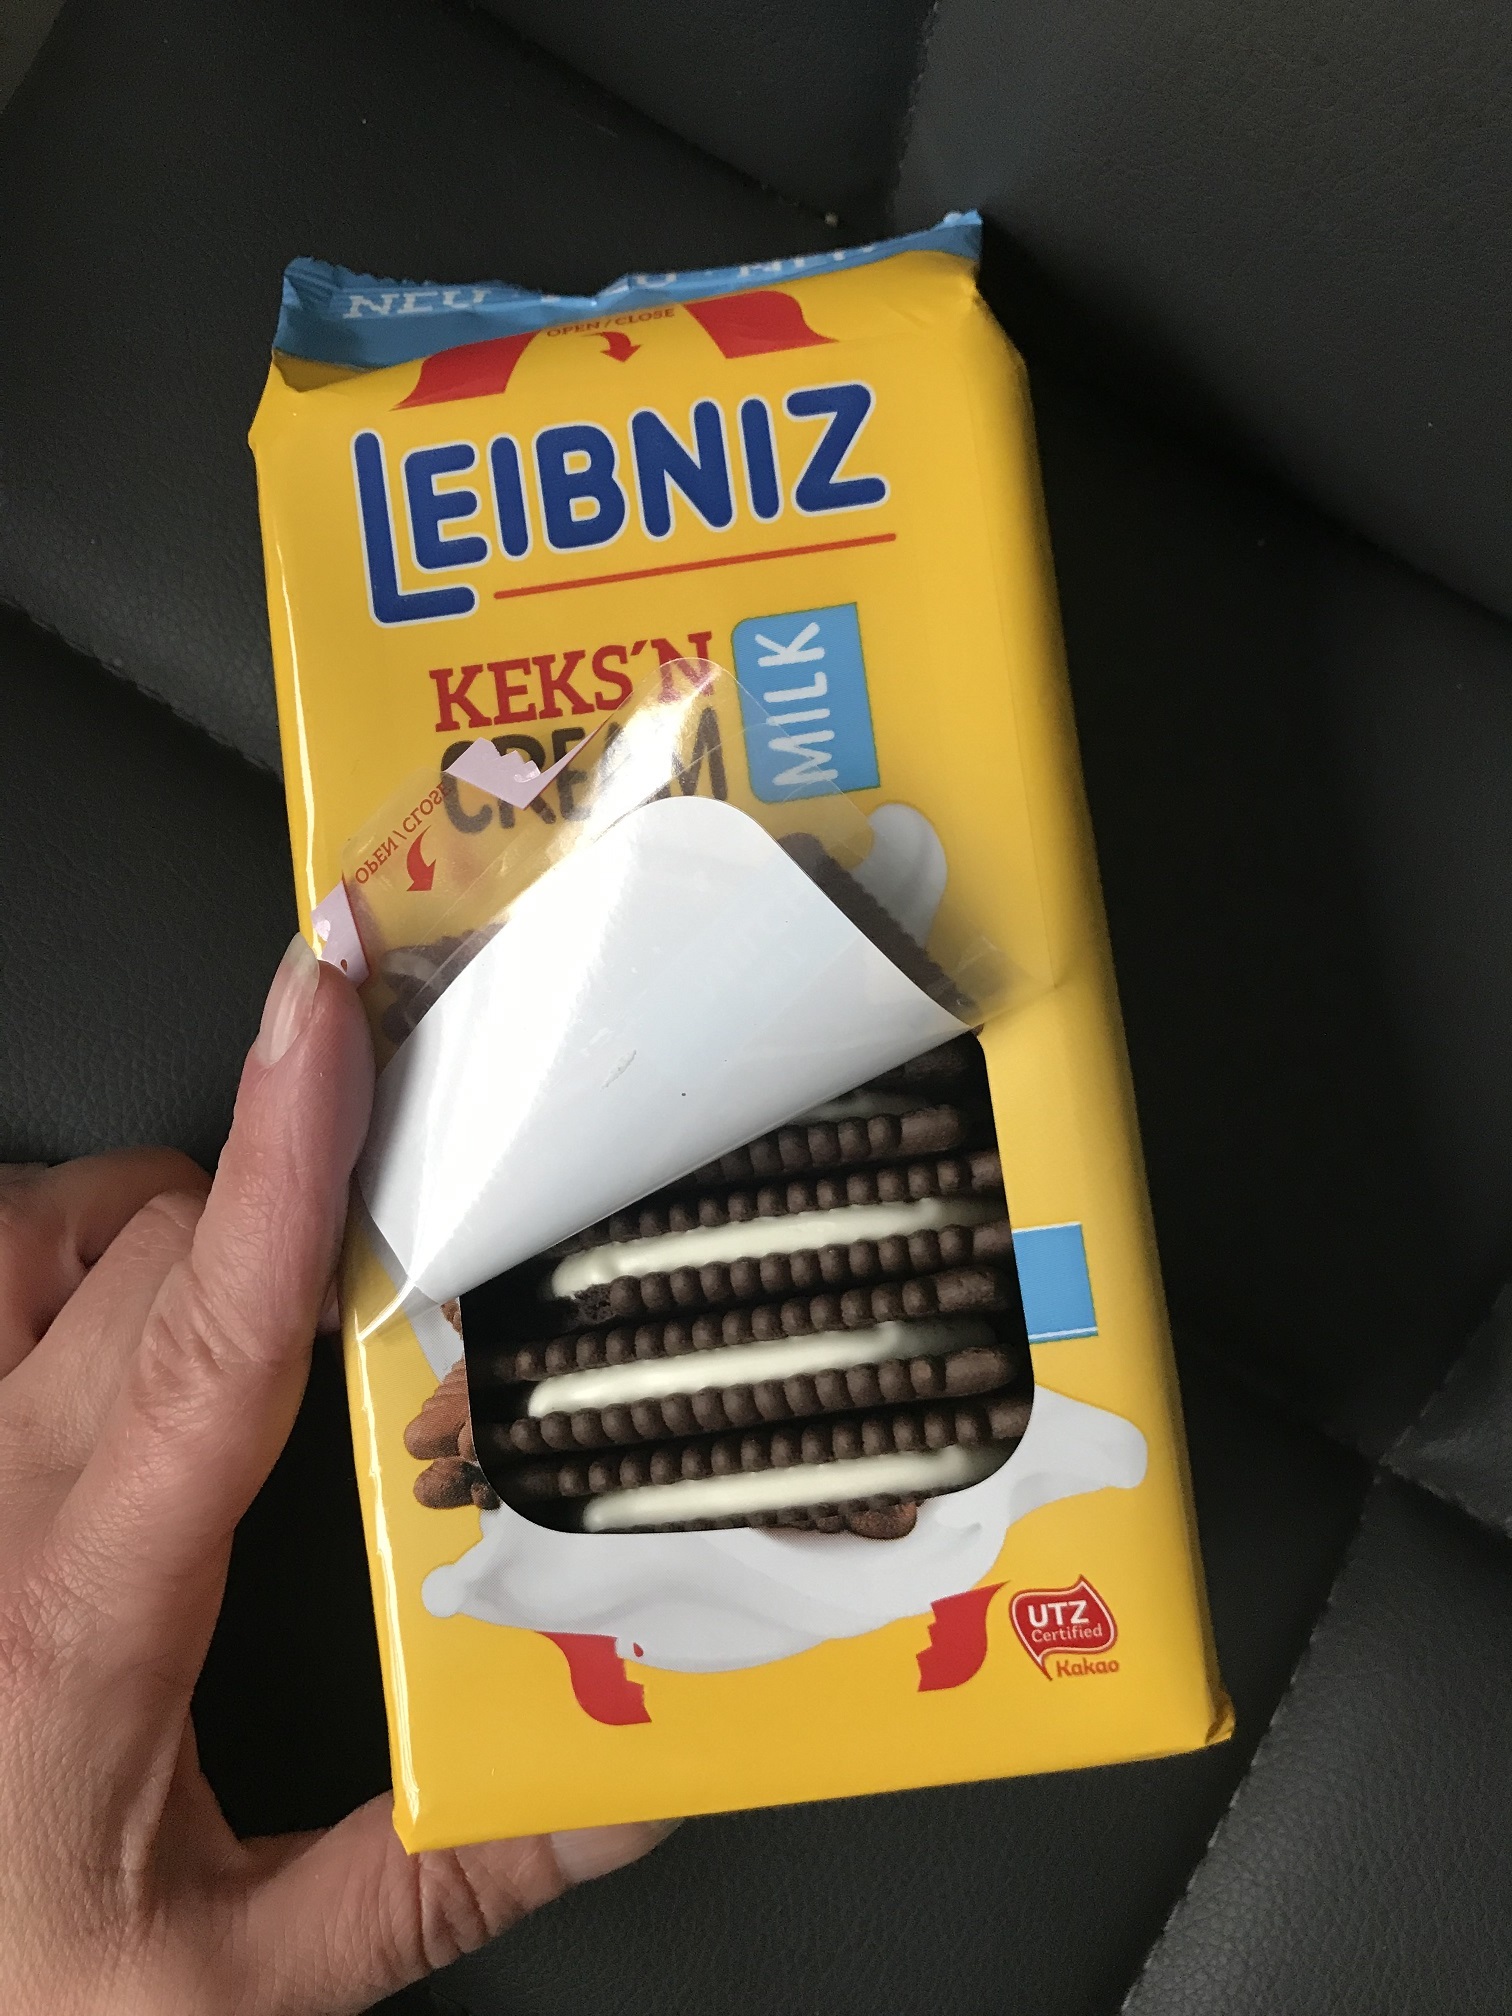 Leibniz Keks Werbung